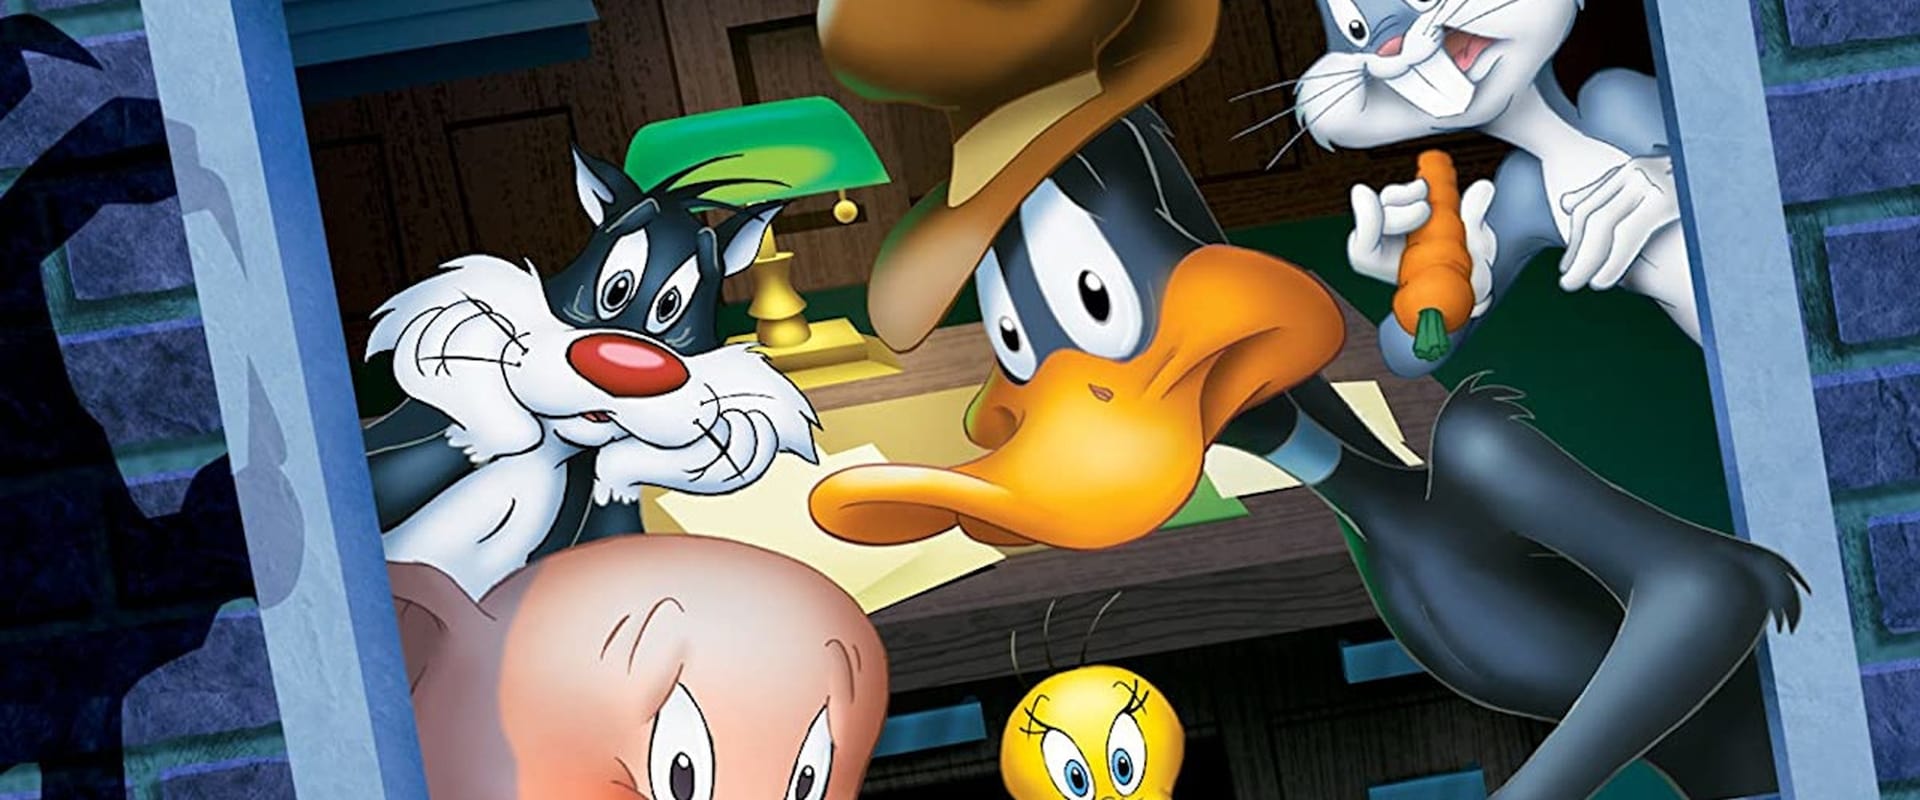 Daffy Duck's Quackbusters